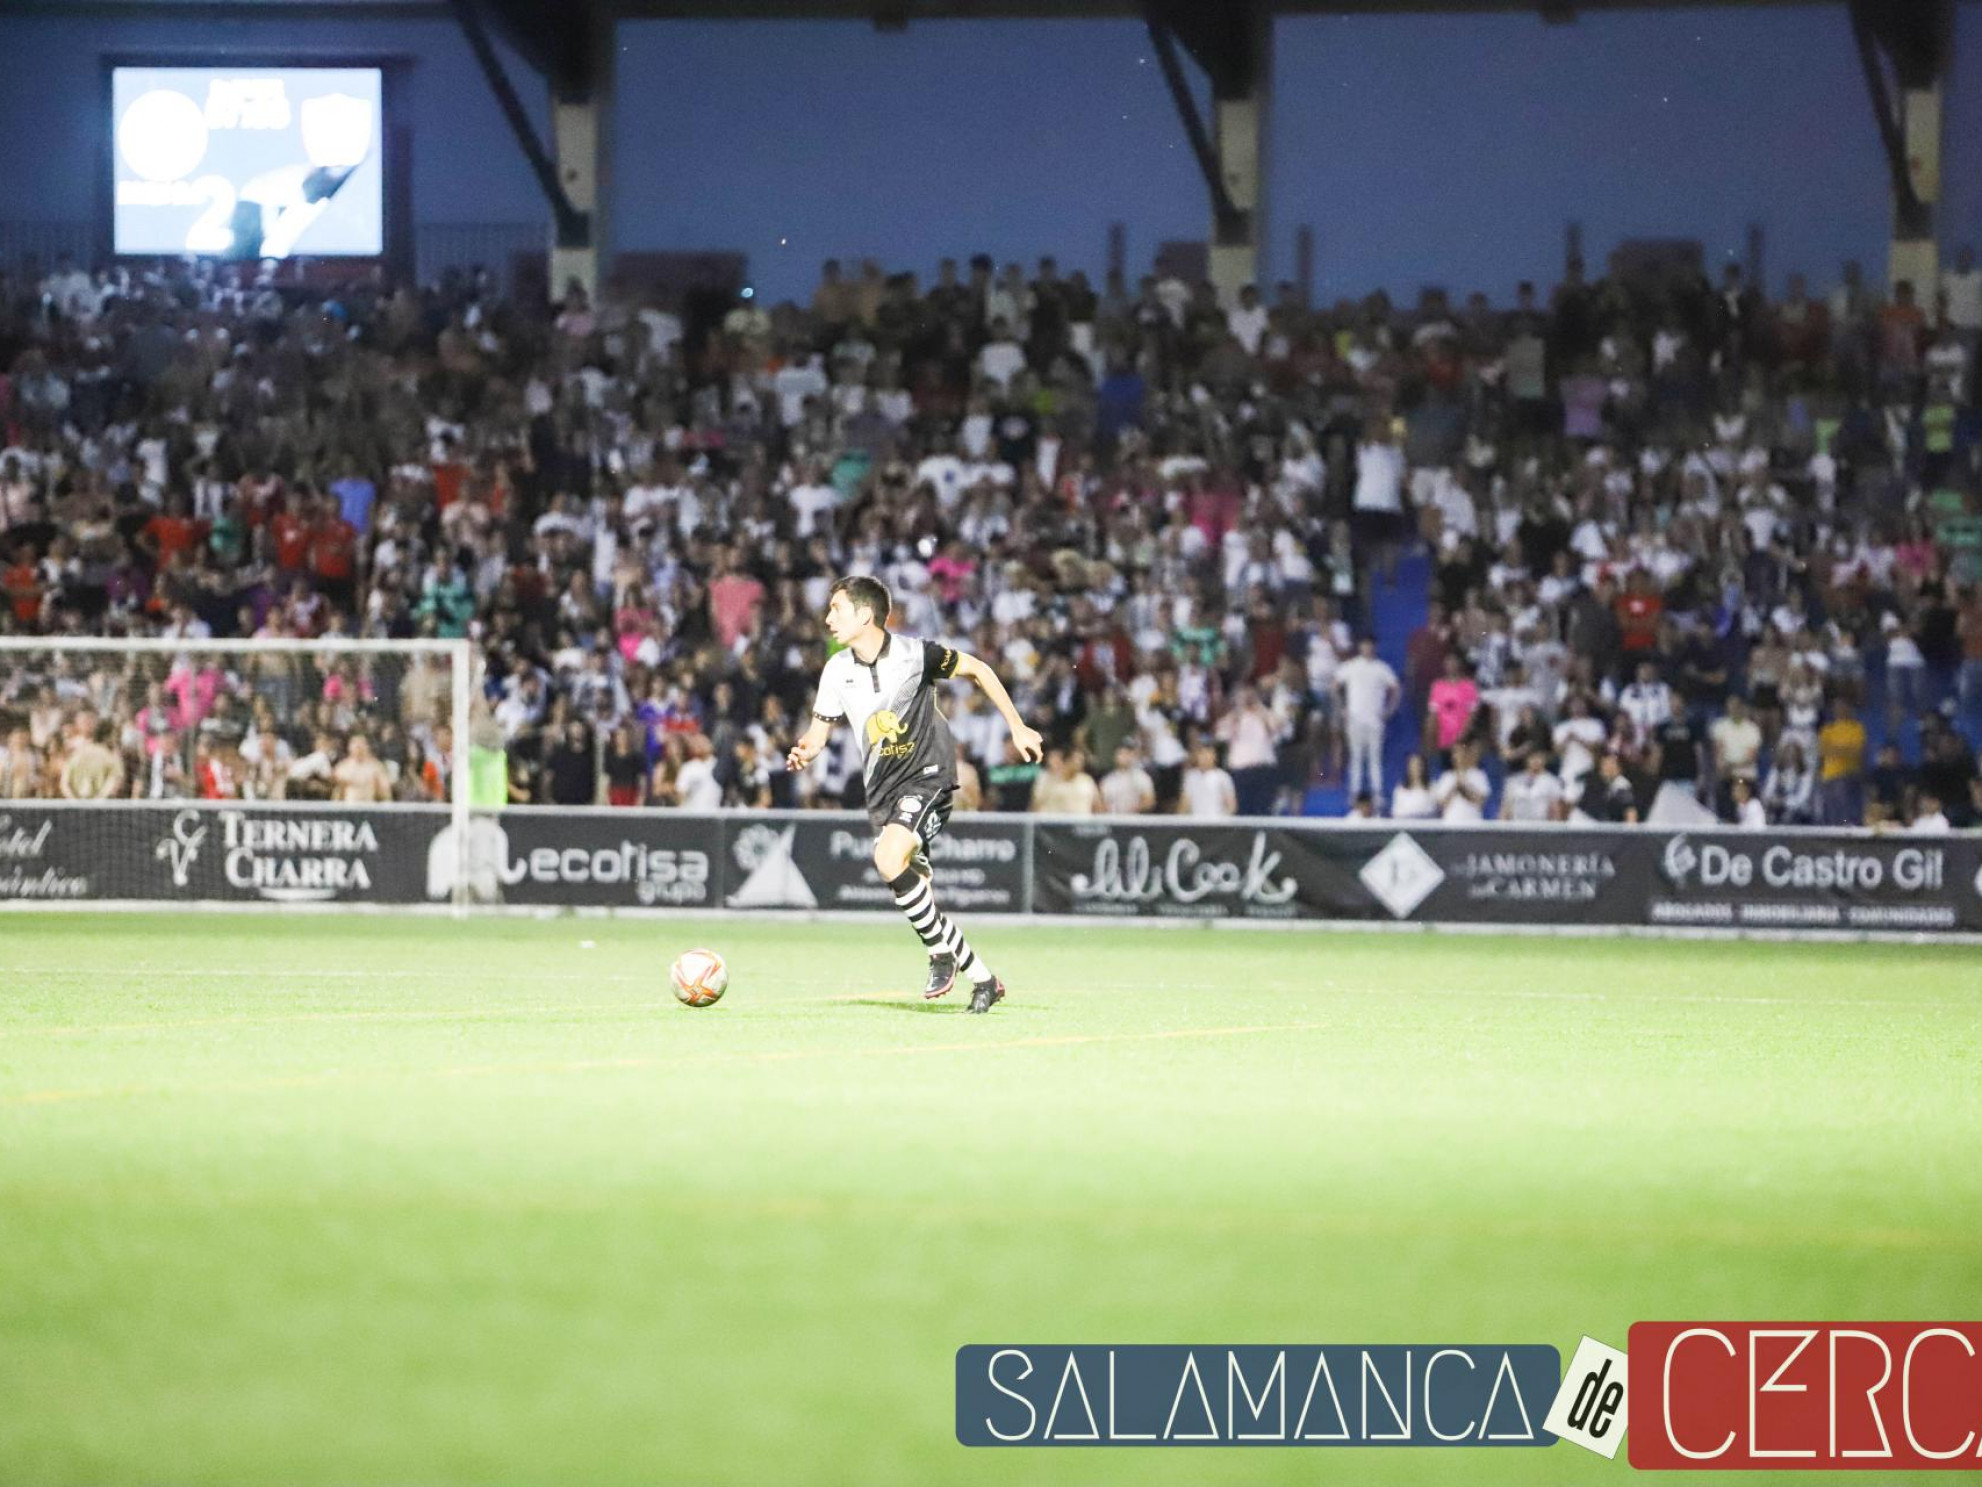 Unionistas de Salamanca CF vs CD Calahorra